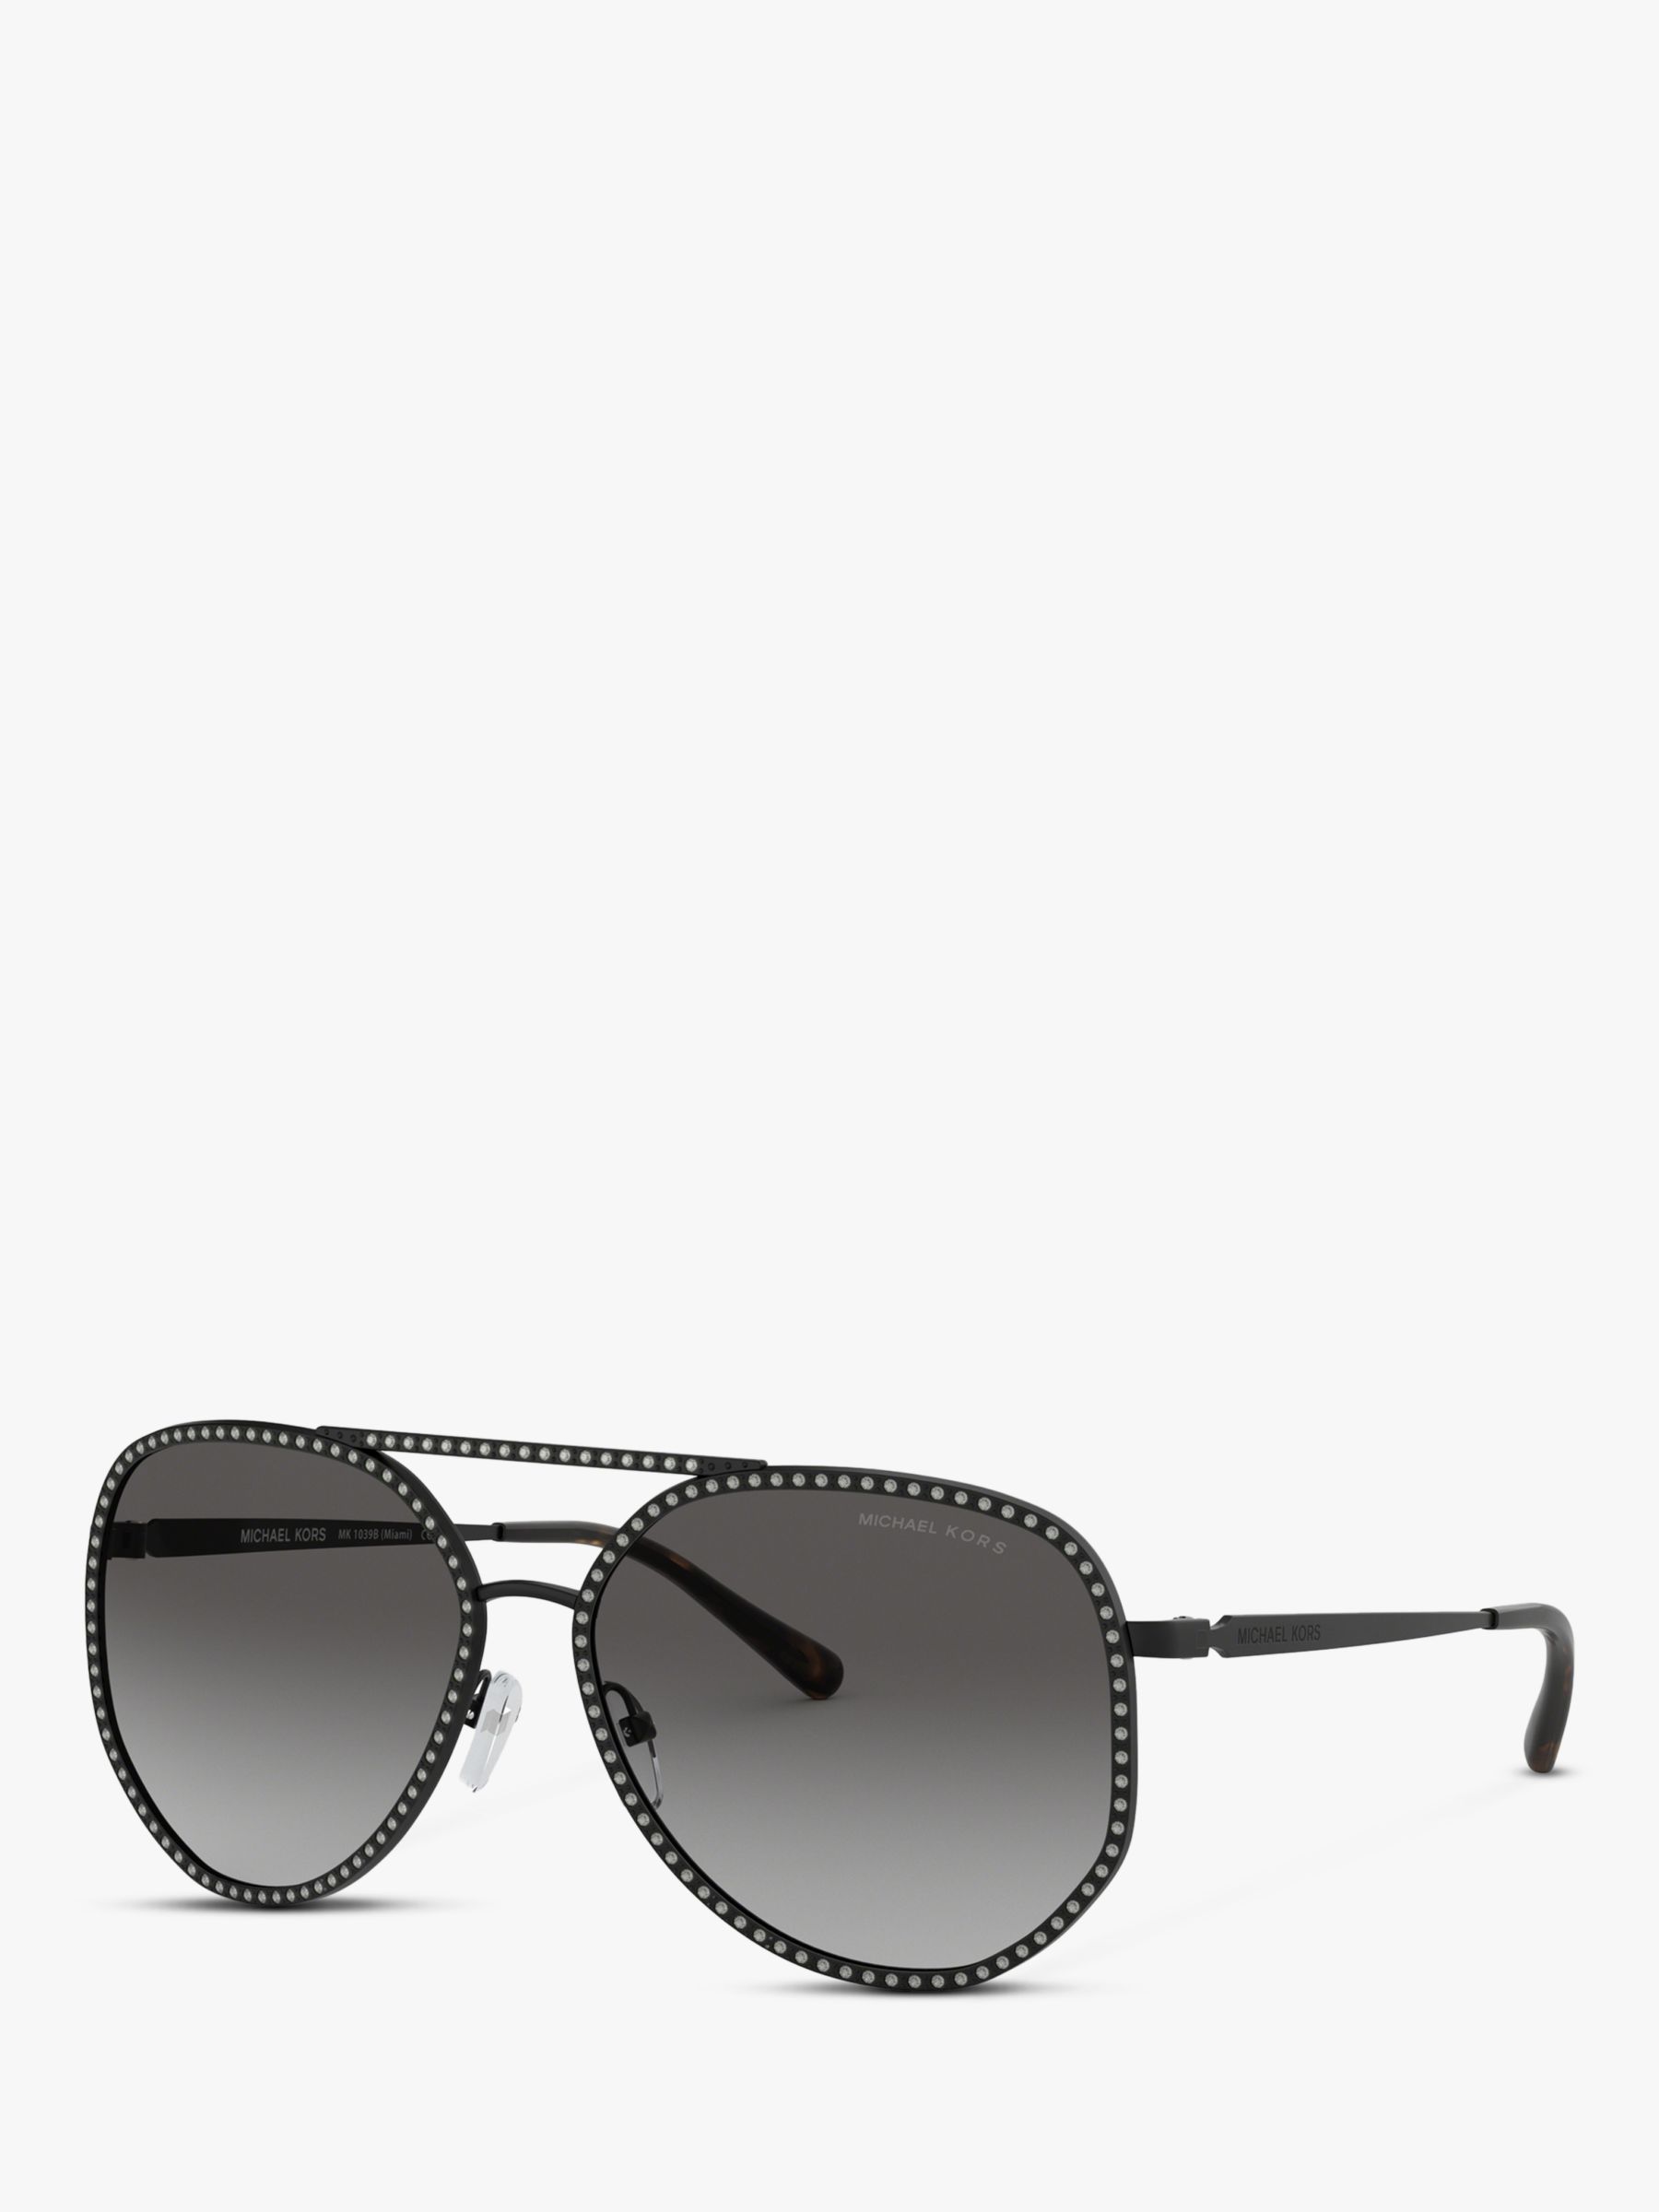 michael kors grey sunglasses